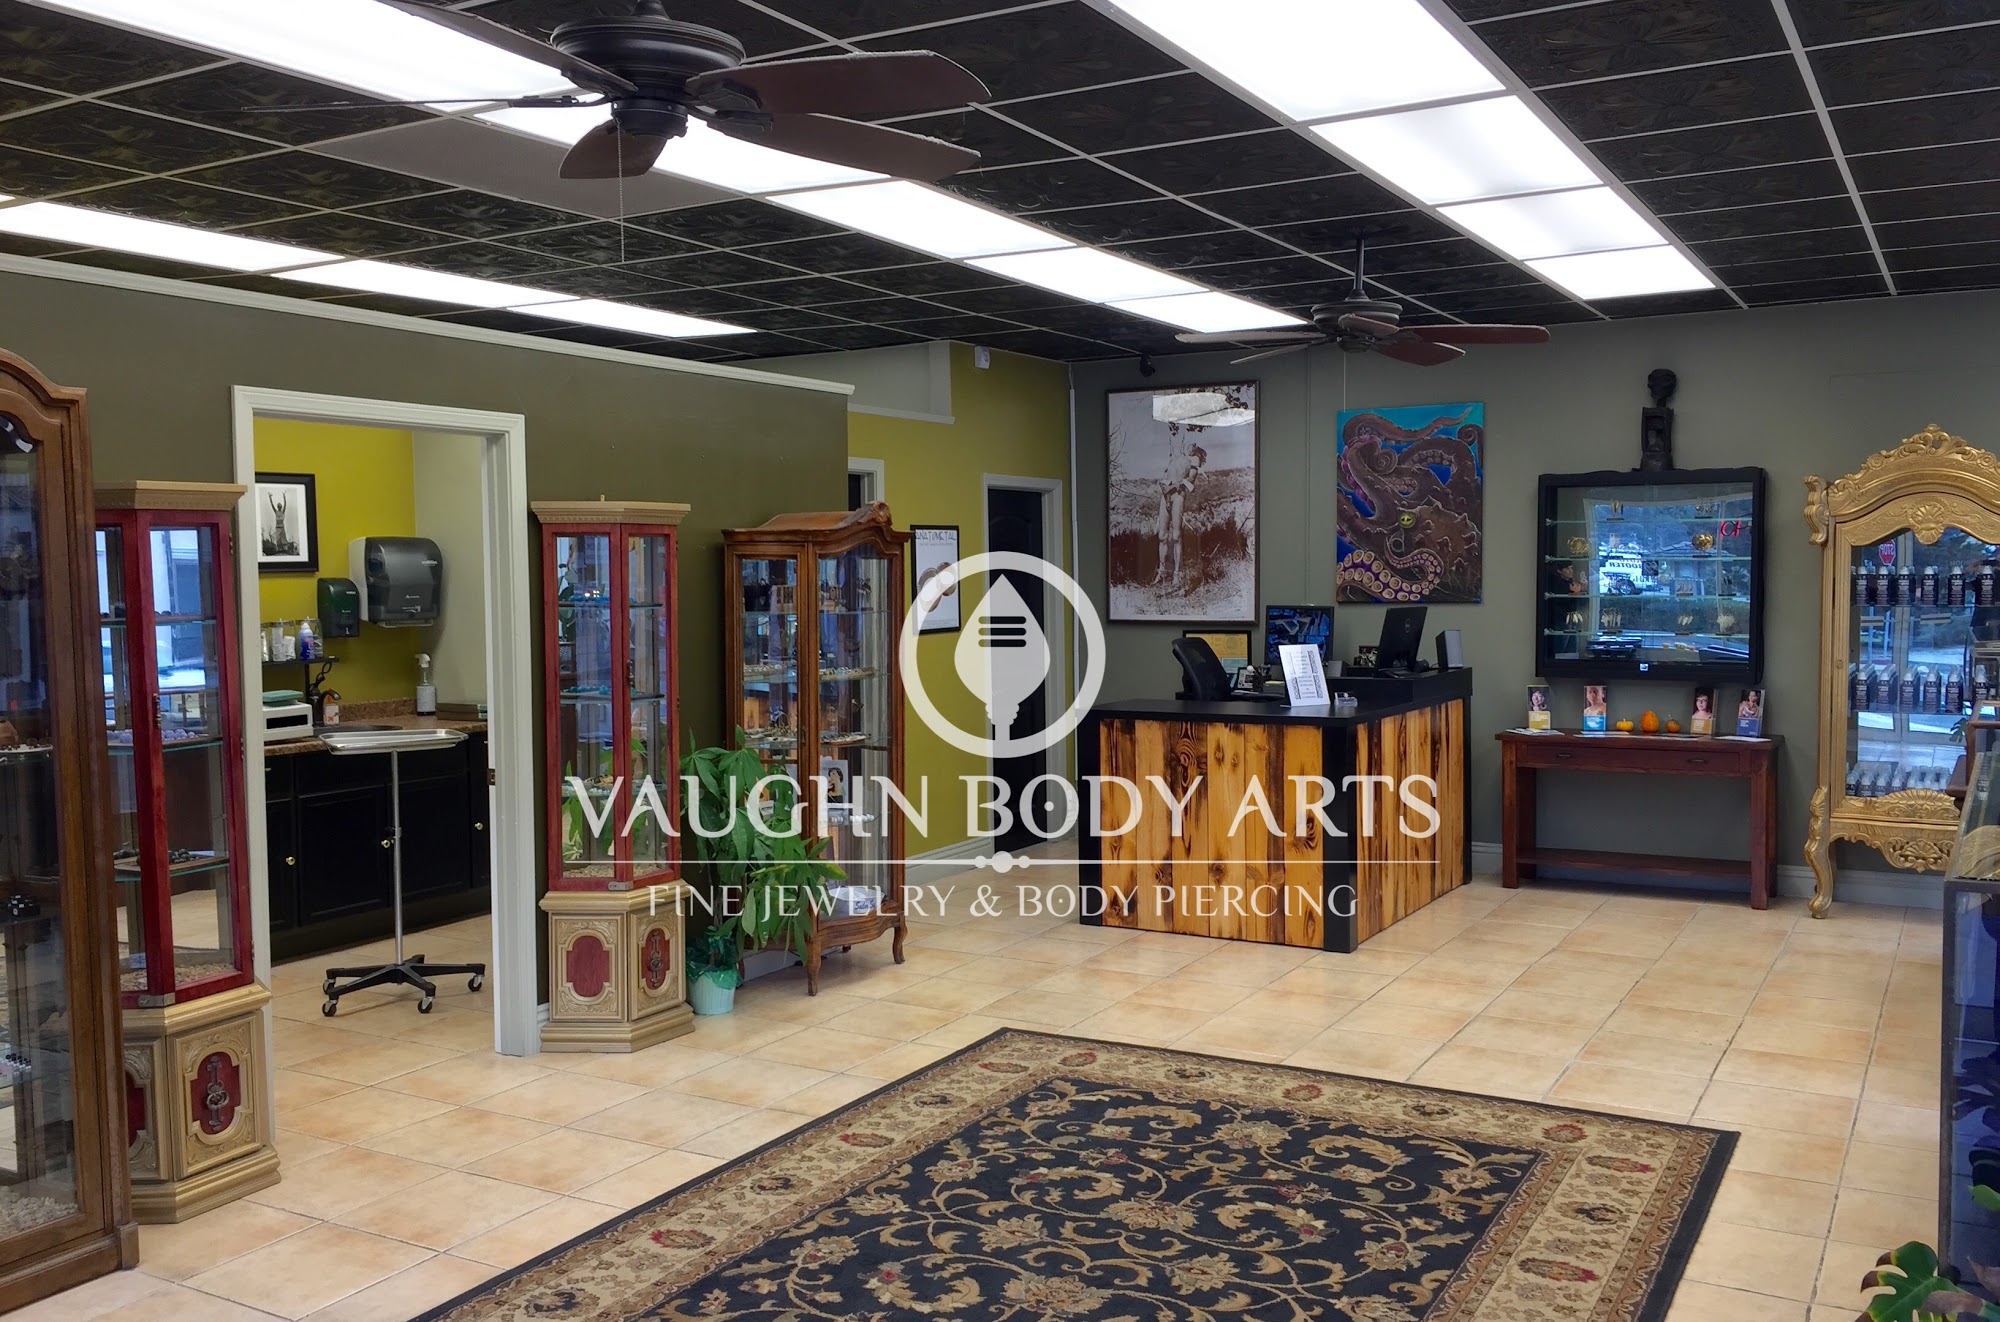 Vaughn Body Arts